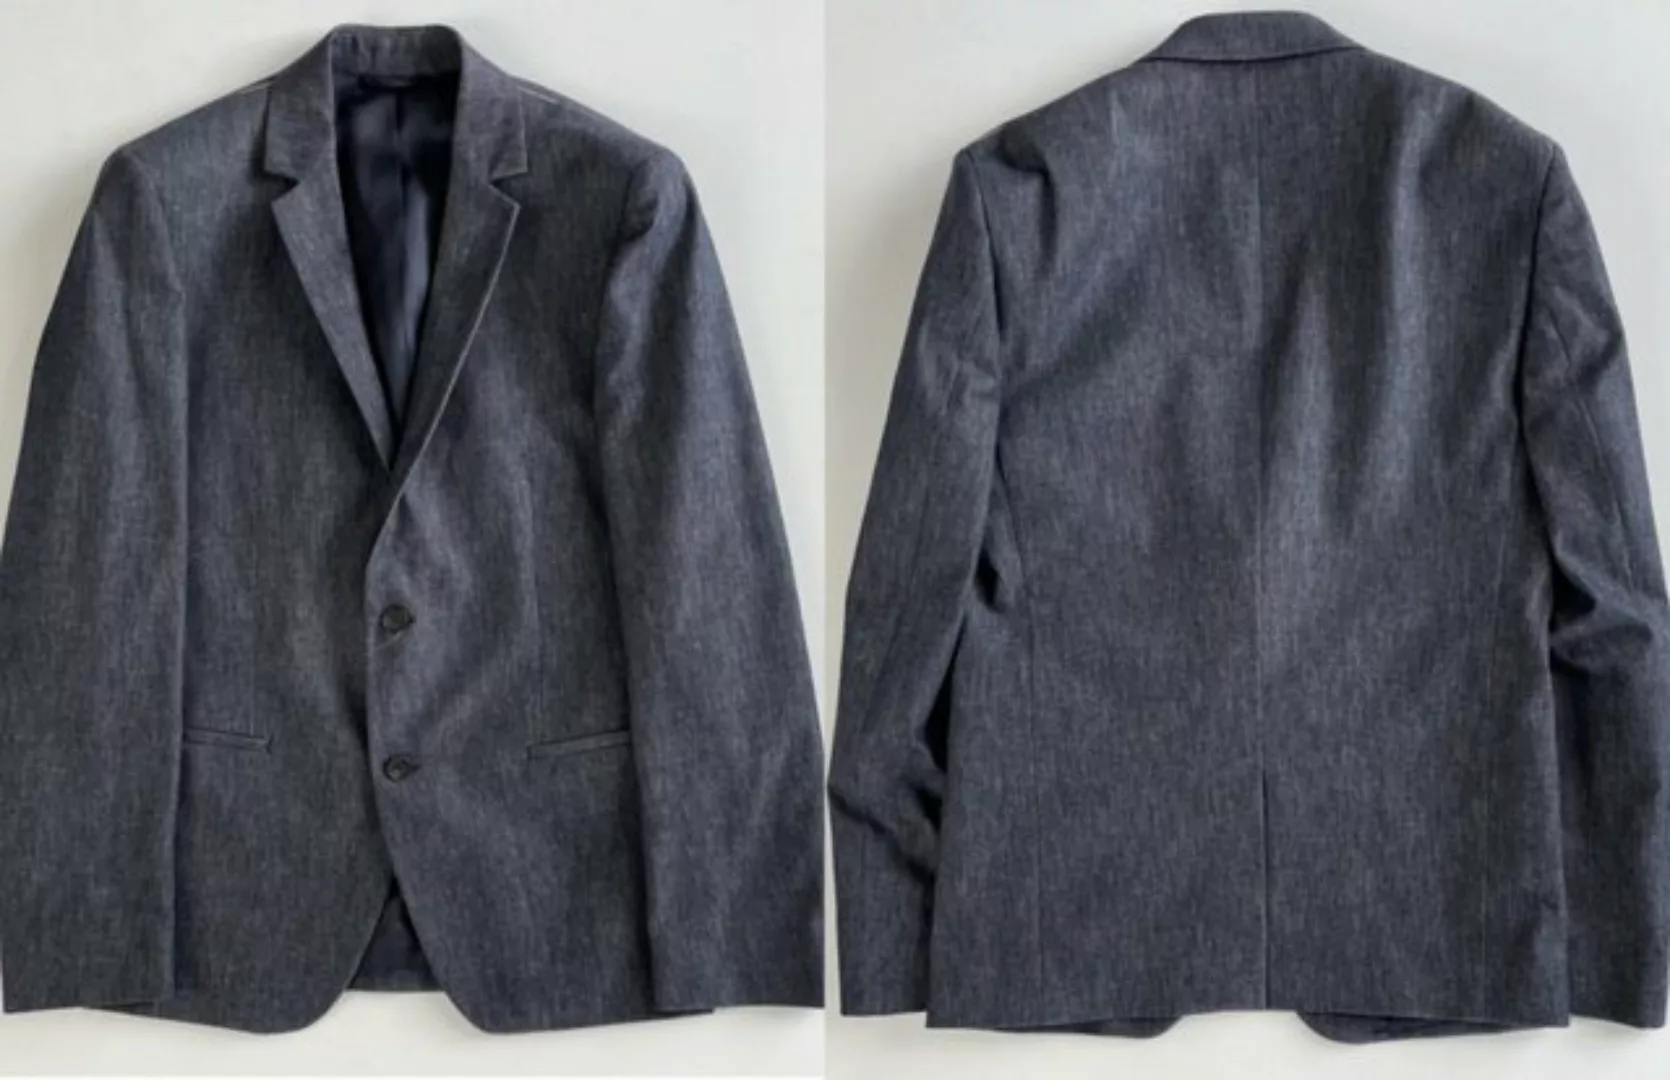 DKNY Sakko DKNY Donna Karan New York Iconic Denim Look Jacket Blazer Jacke günstig online kaufen